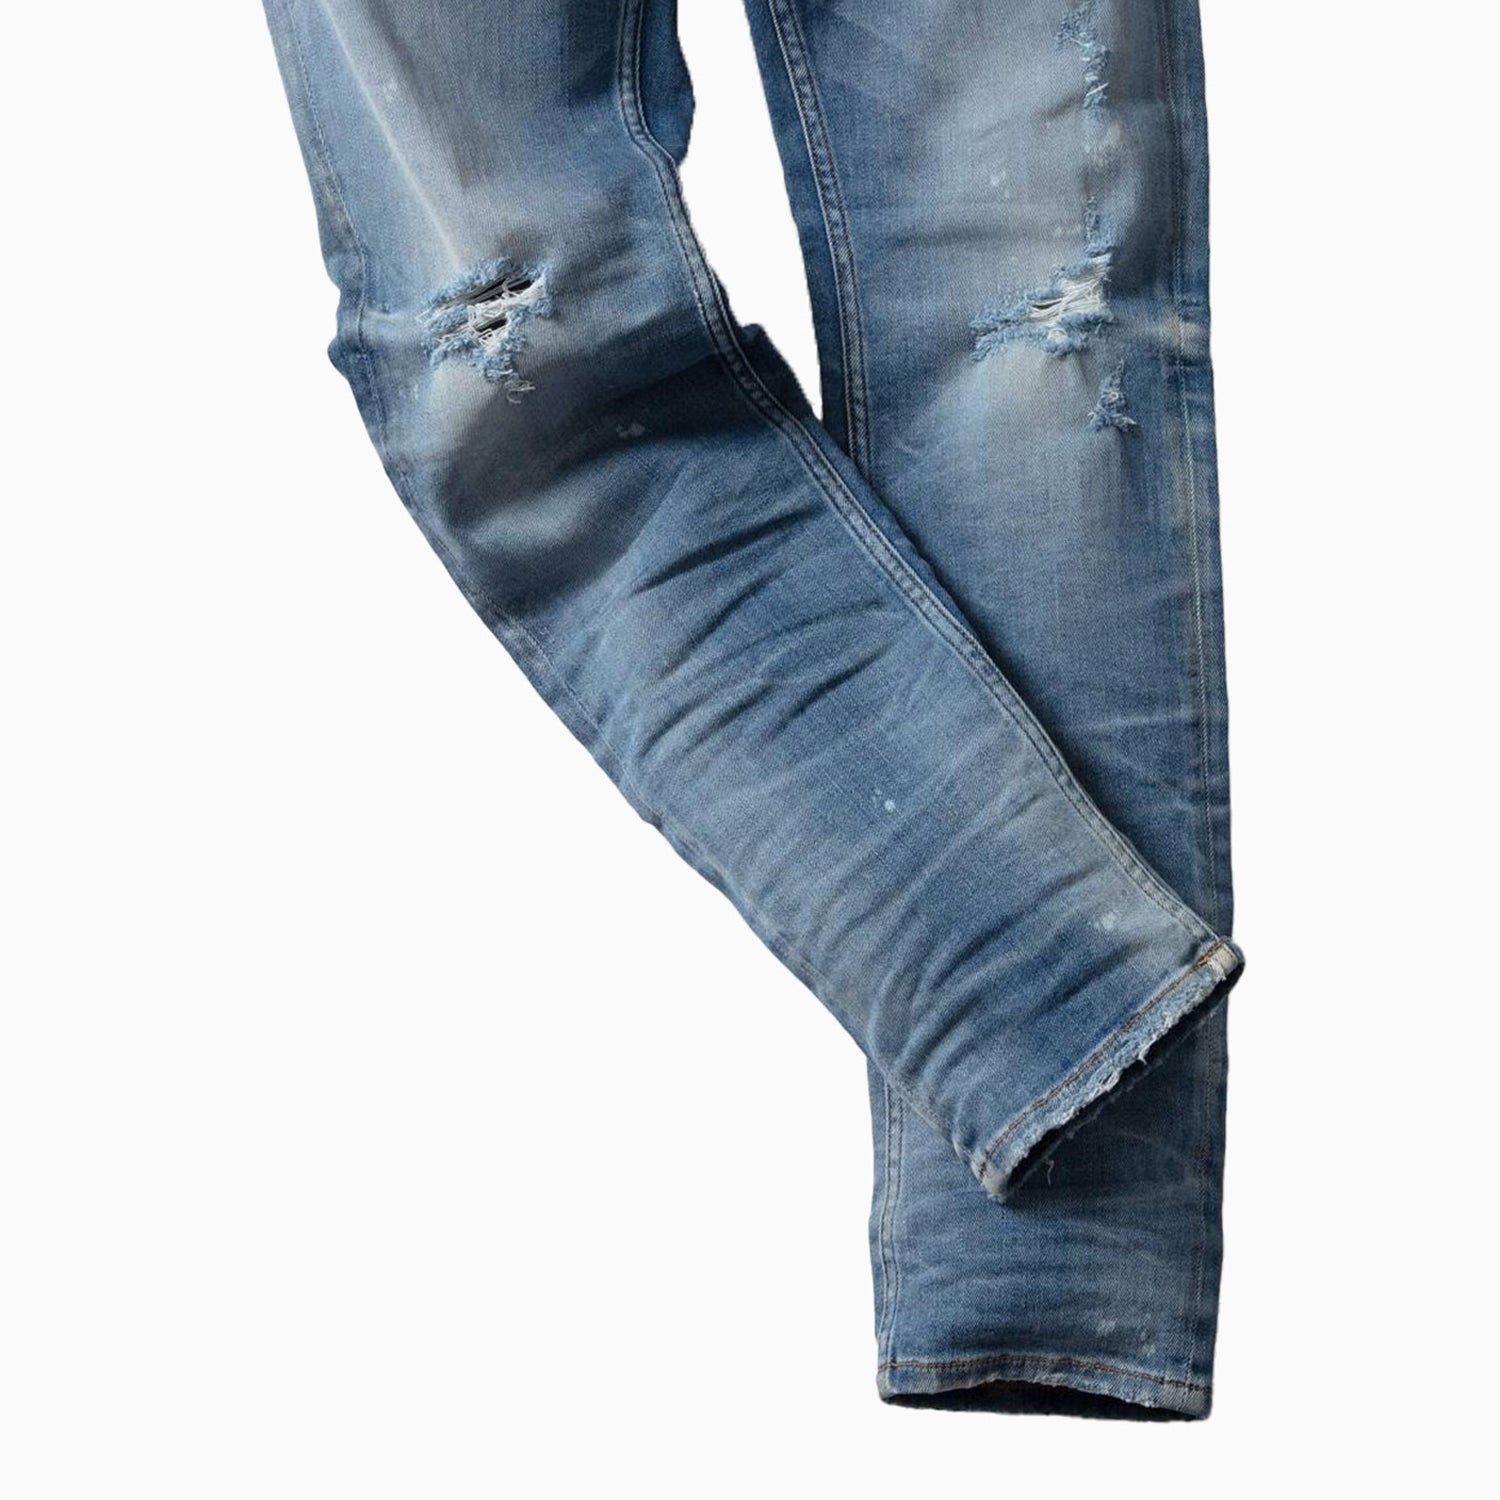 artmeetschaos-mens-bagatelle-denim-jeans-pant-amc778-mw